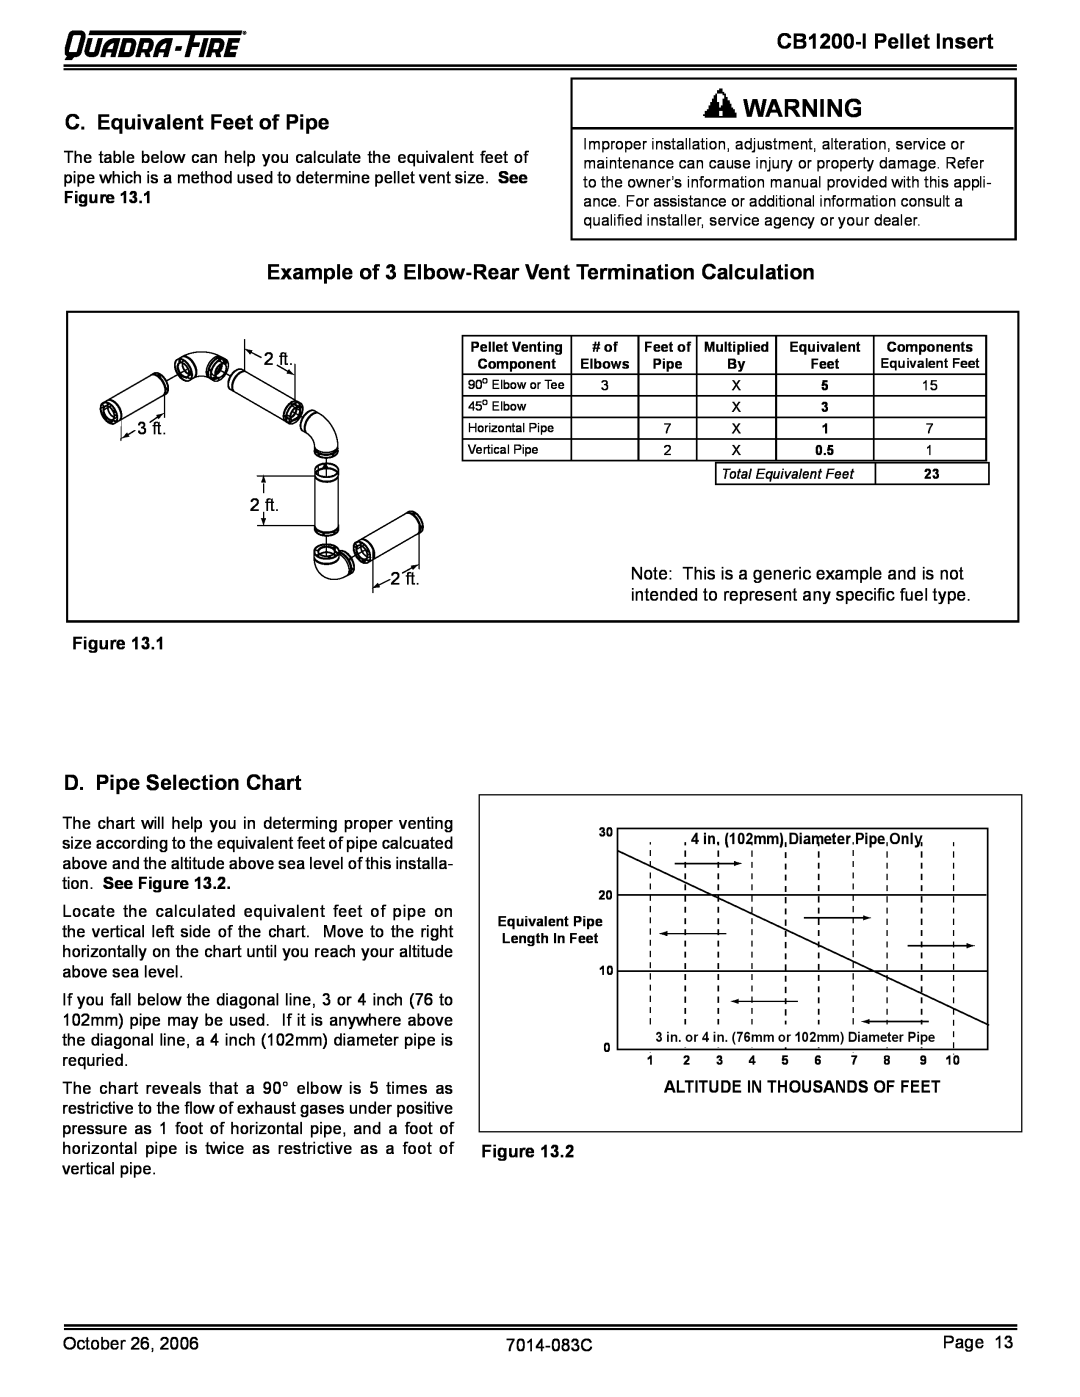 Quadra-Fire CB1200I-B owner manual C. Equivalent Feet of Pipe, D. Pipe Selection Chart, CB1200-IPellet Insert 